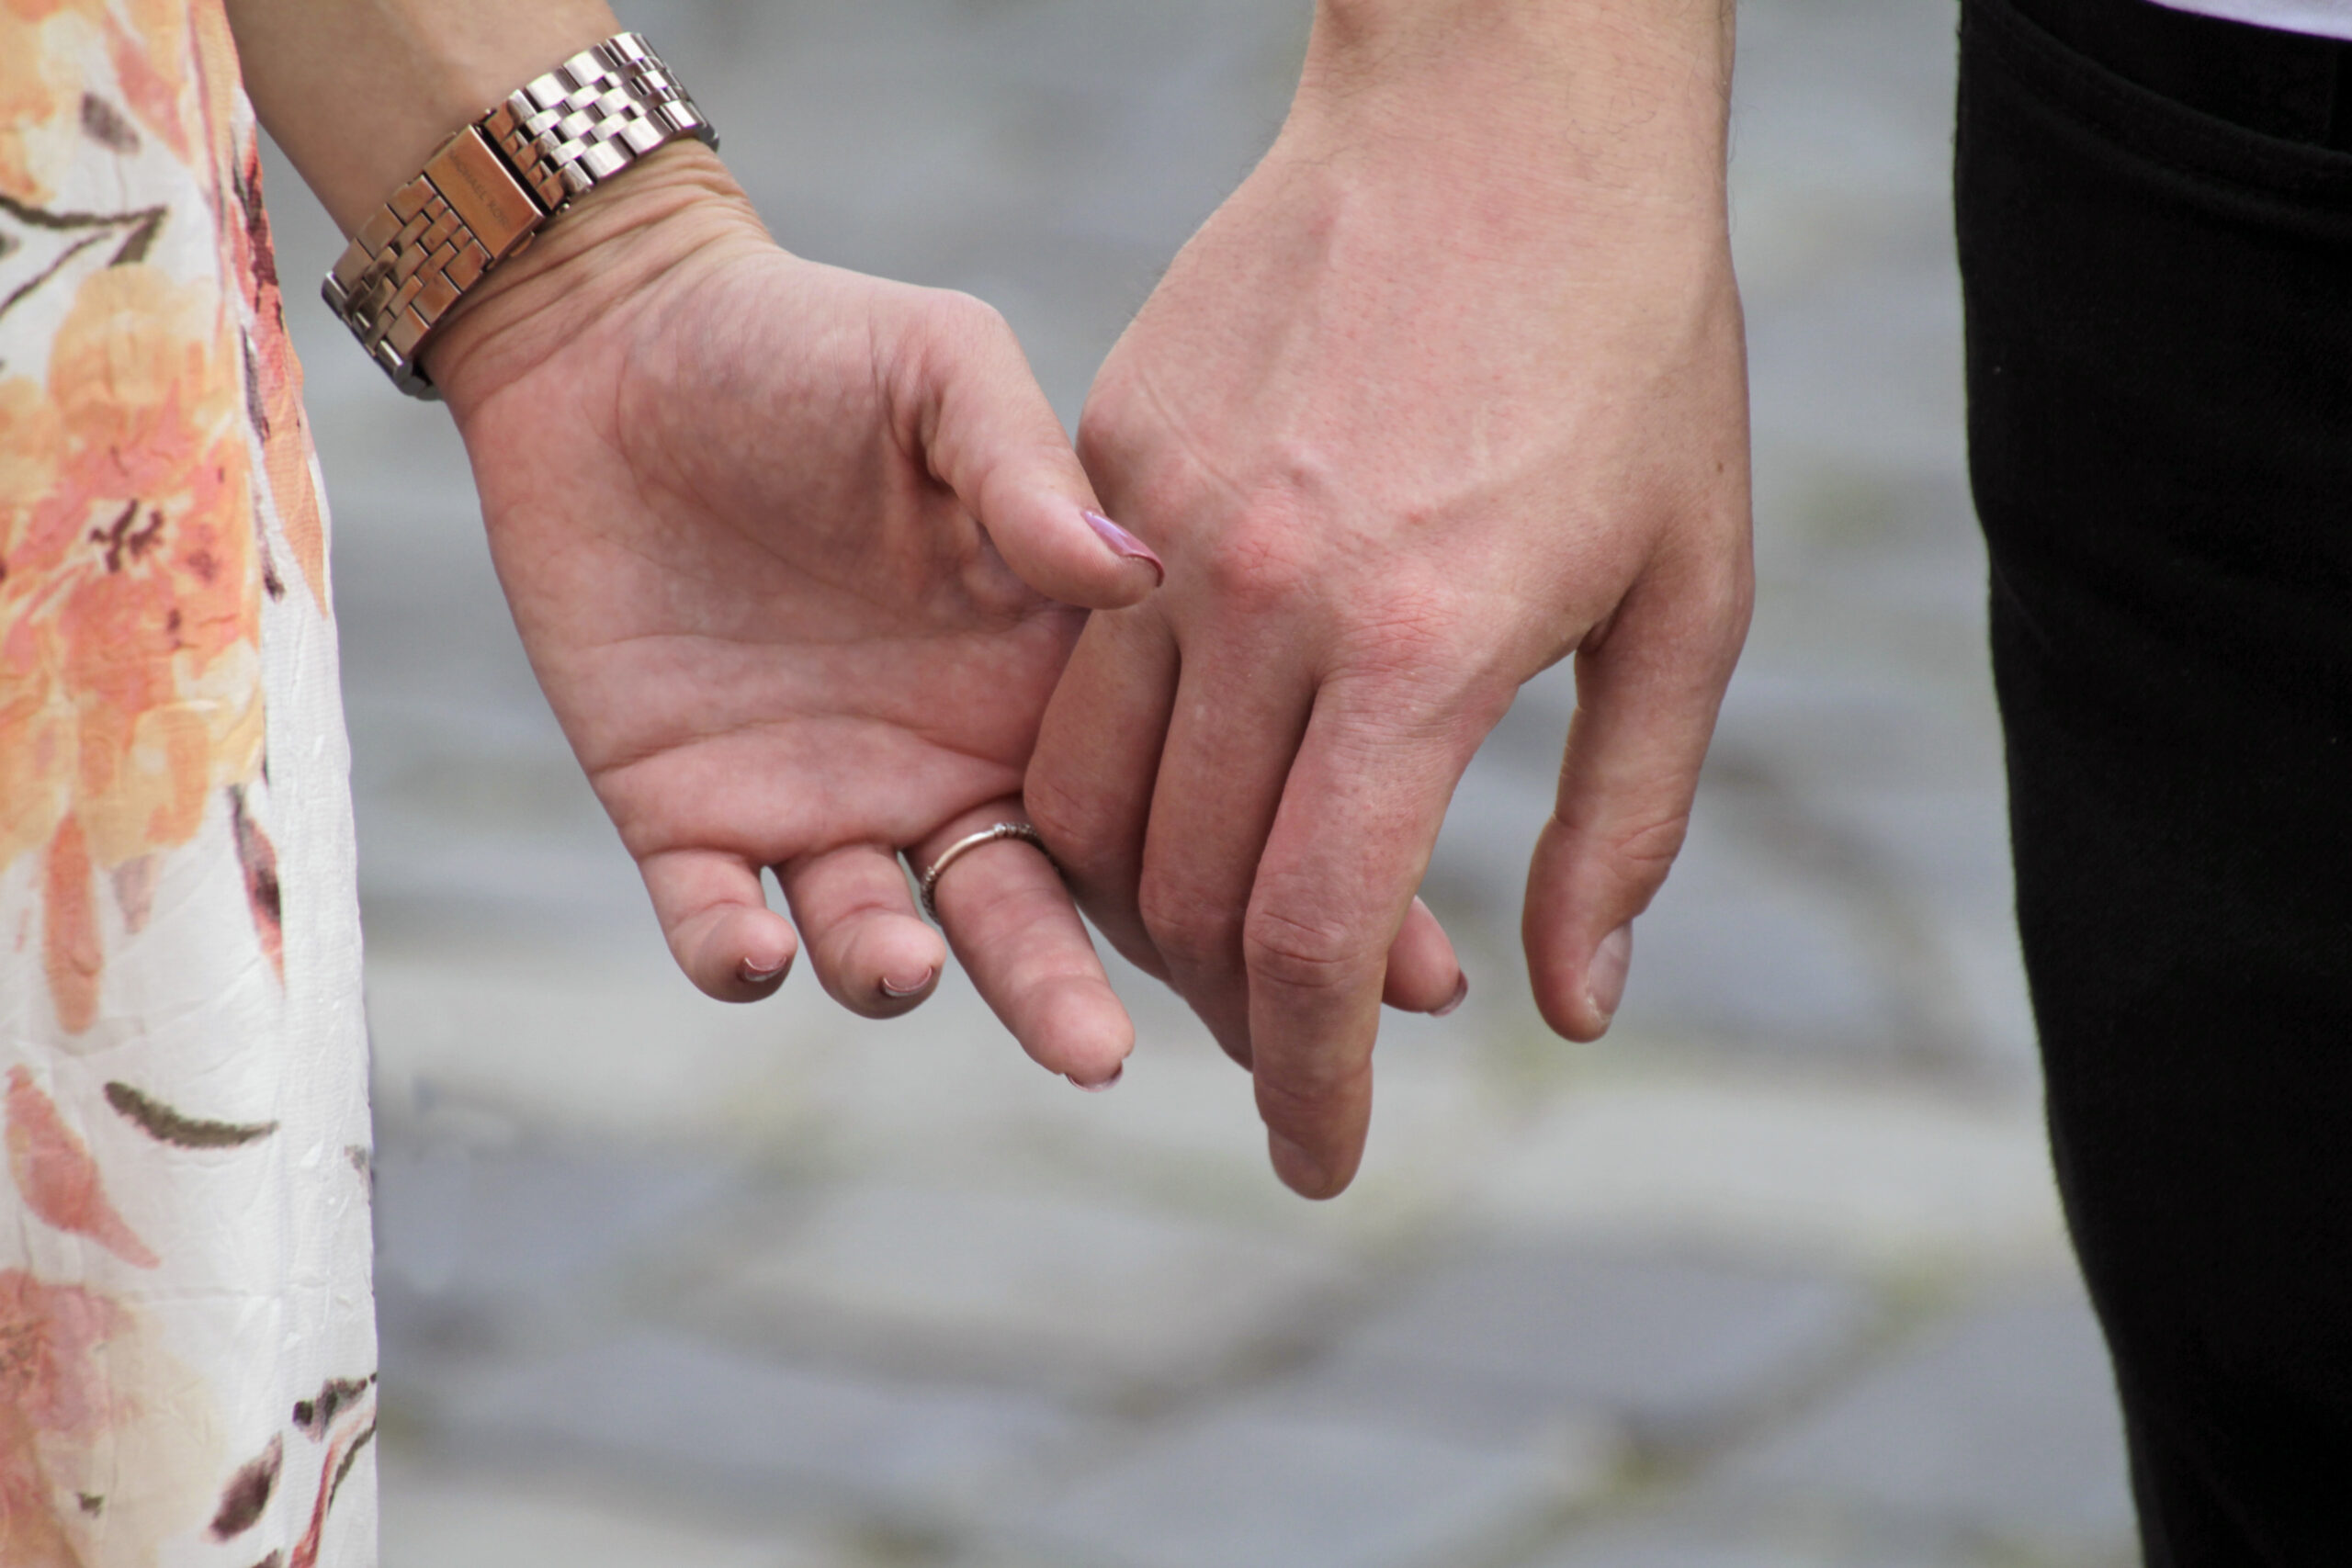 Holding hands/Skin